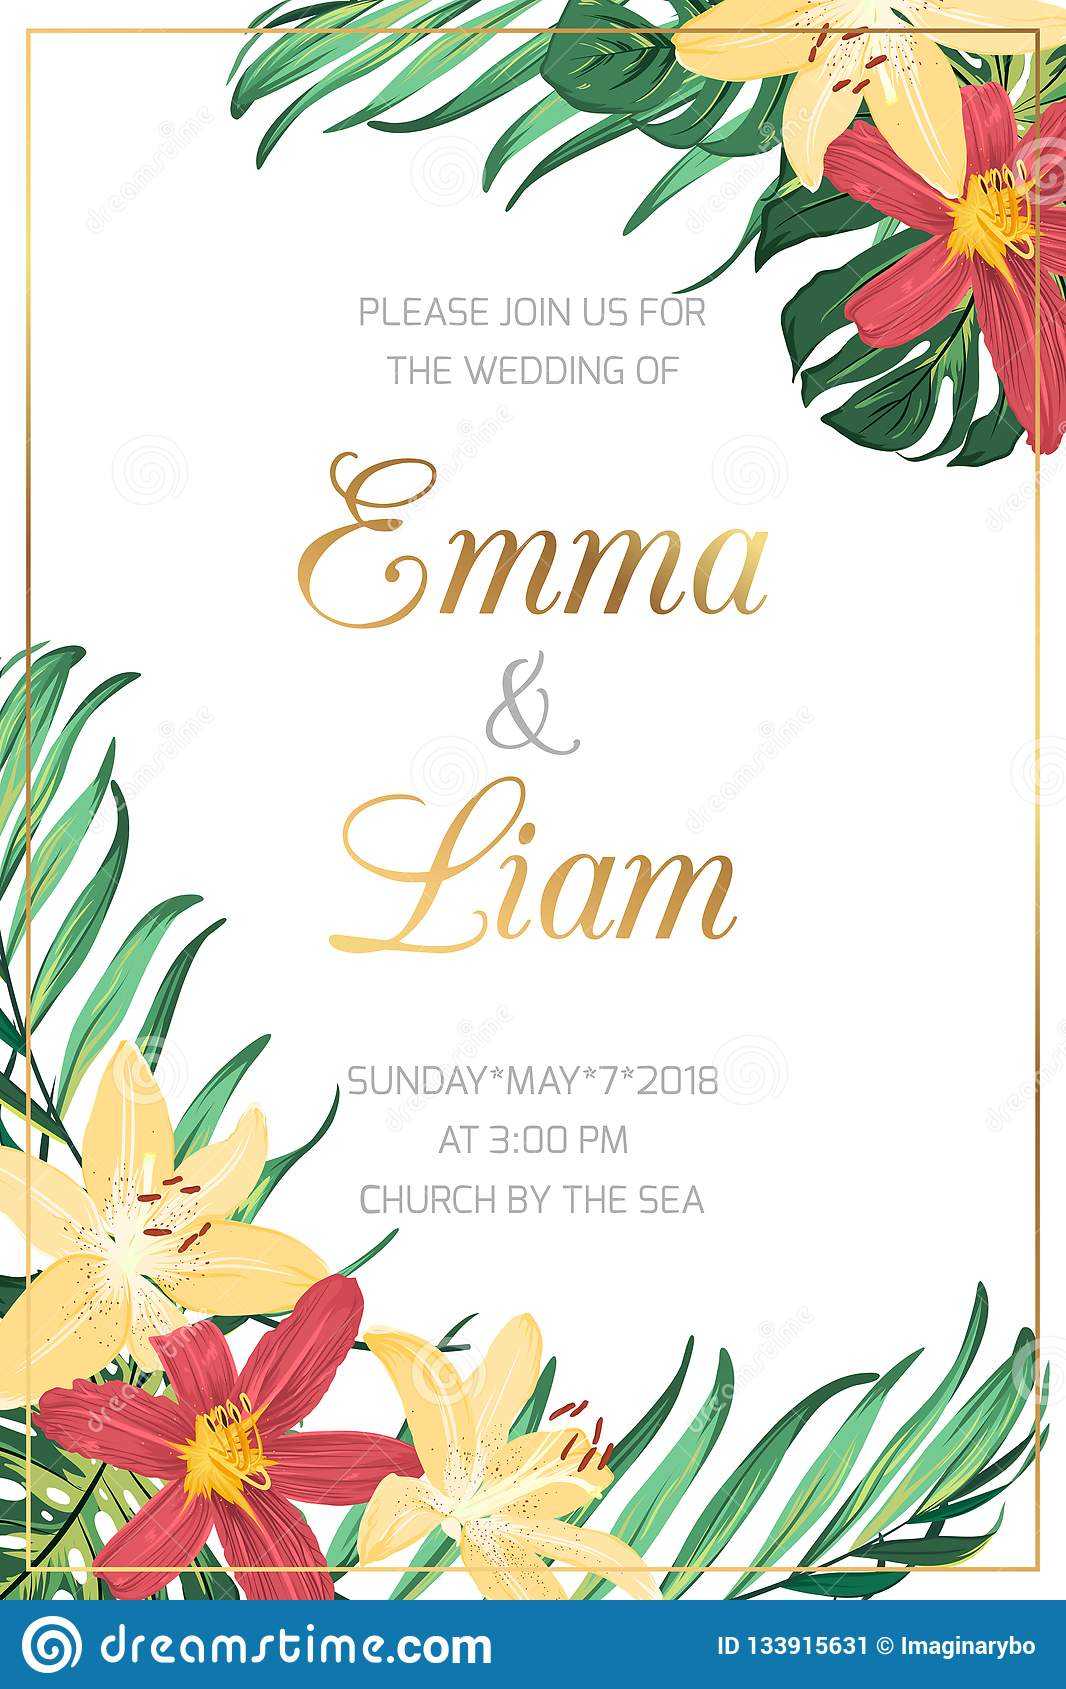 Wedding Marriage Event Invitation Card Template. Red Yellow With Event Invitation Card Template